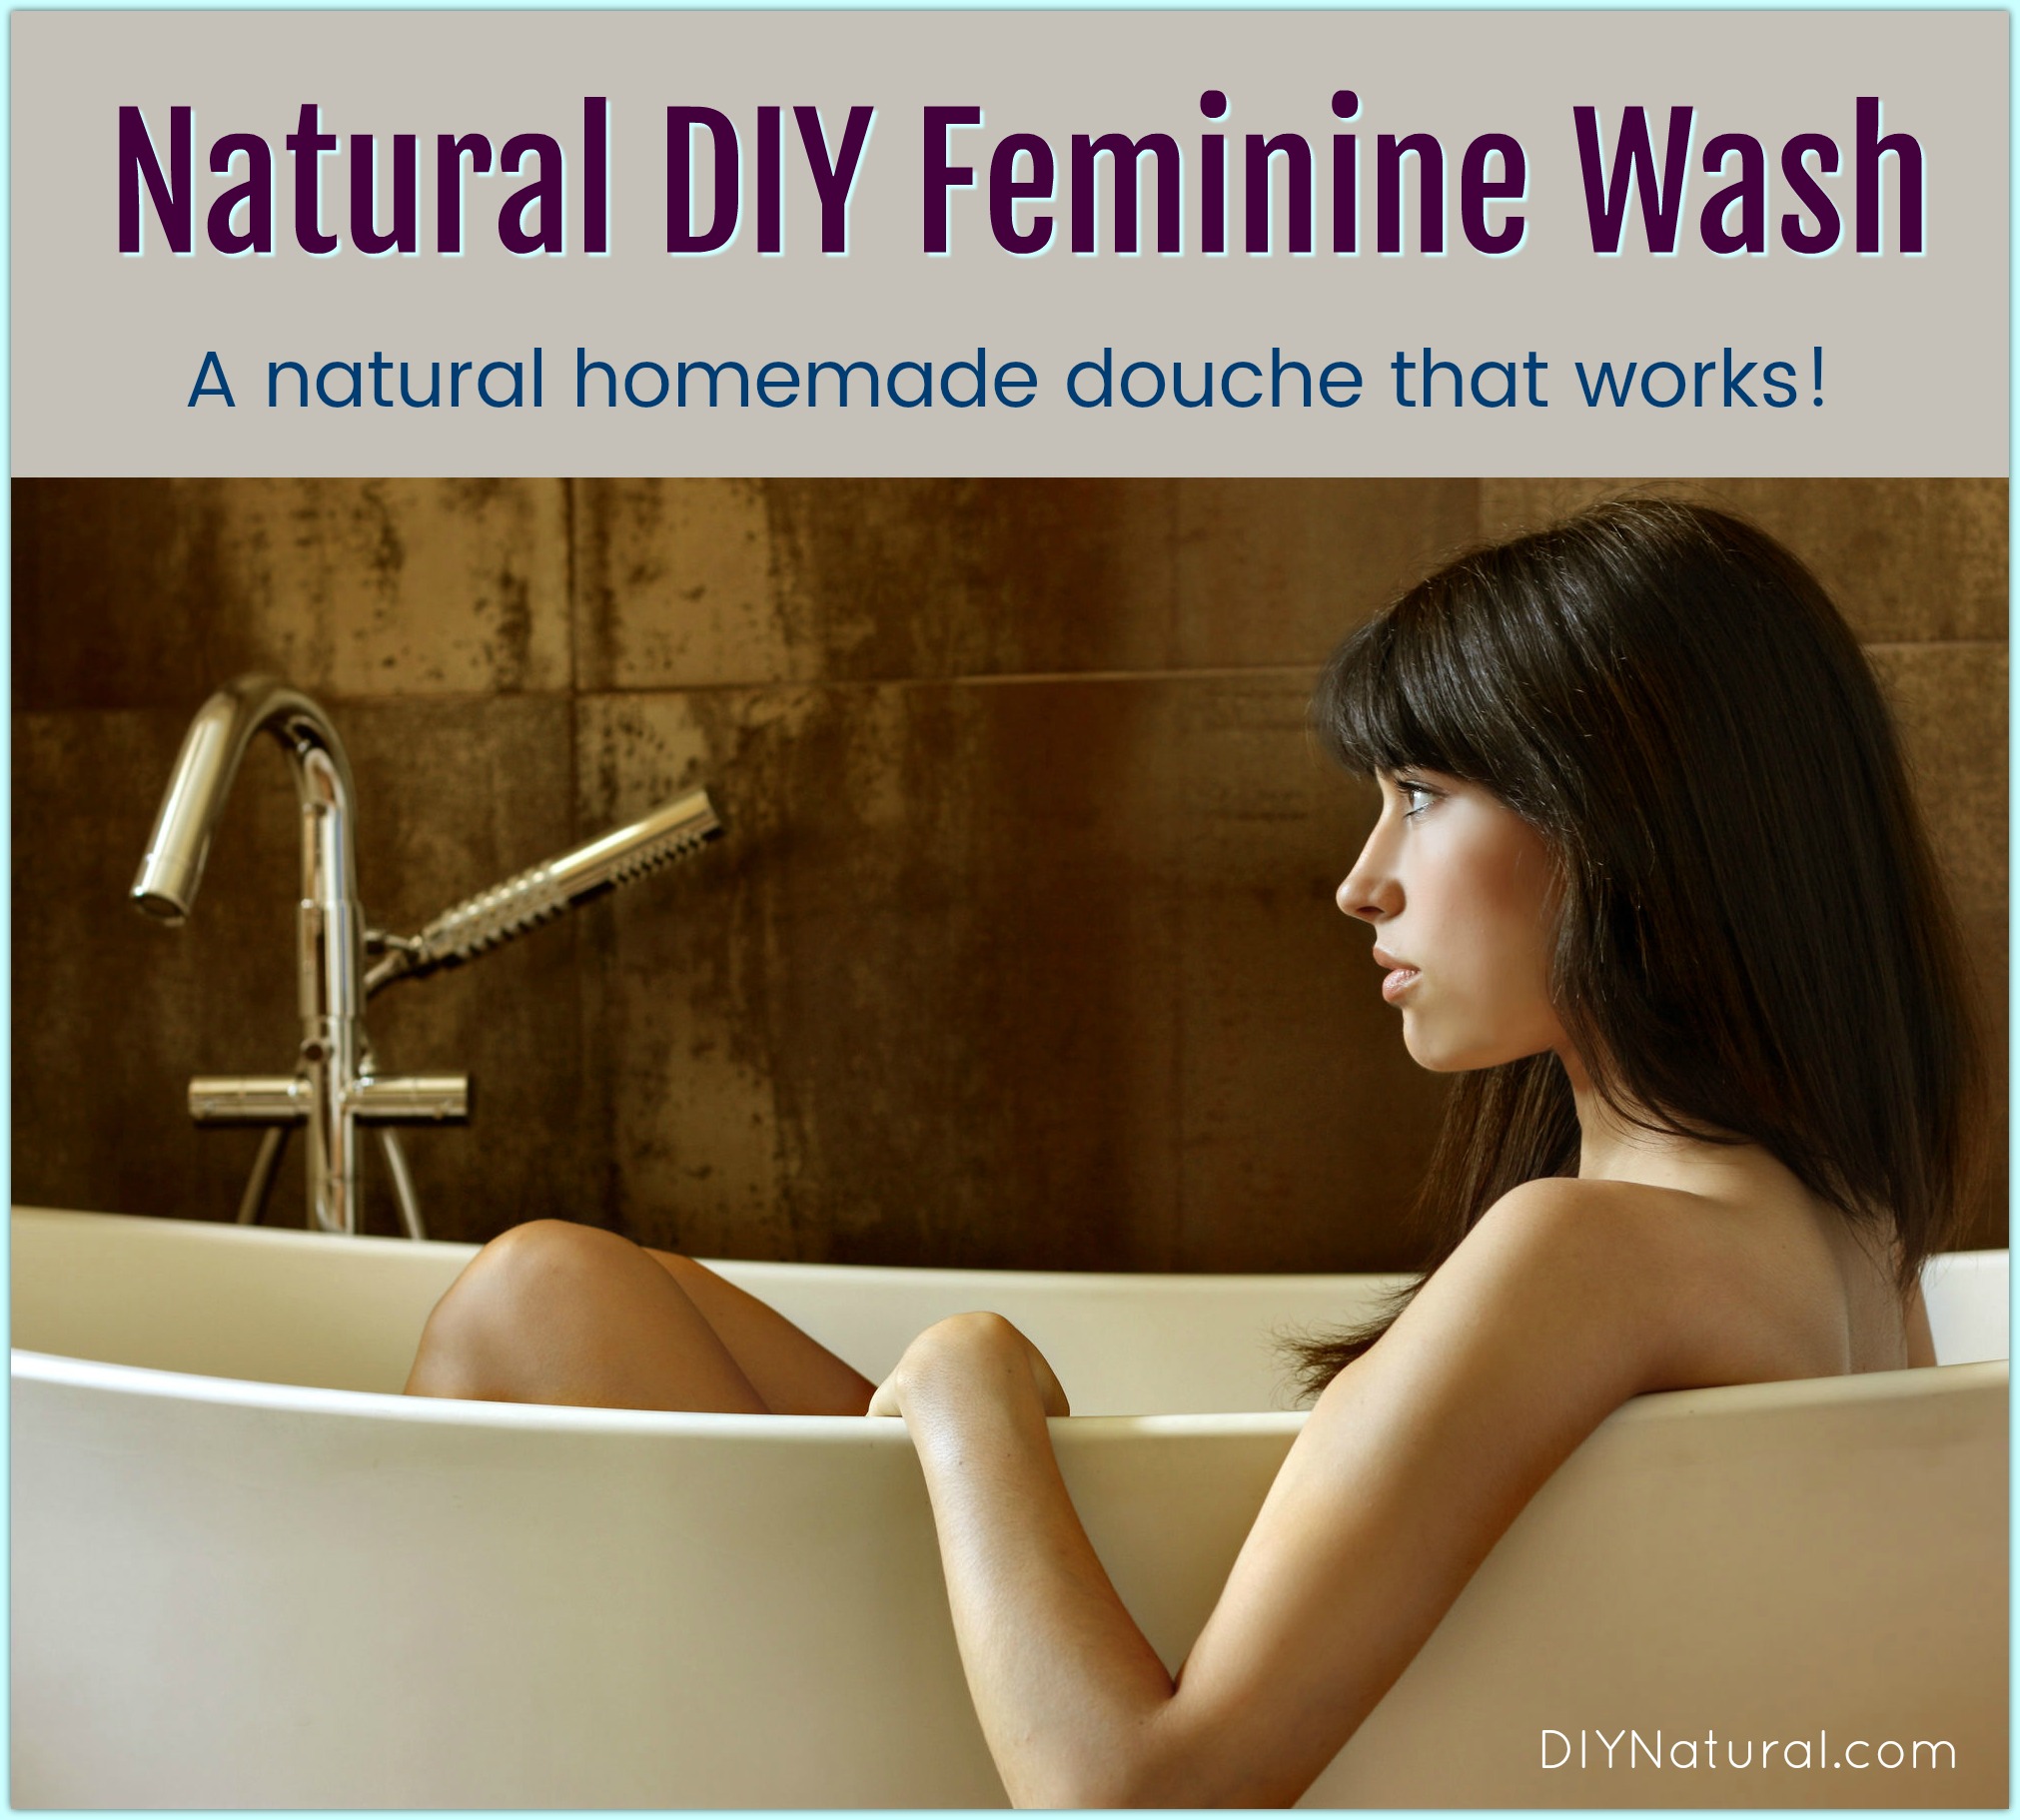 Homemade Douche Make Your Own Natural DIY Feminine Wash